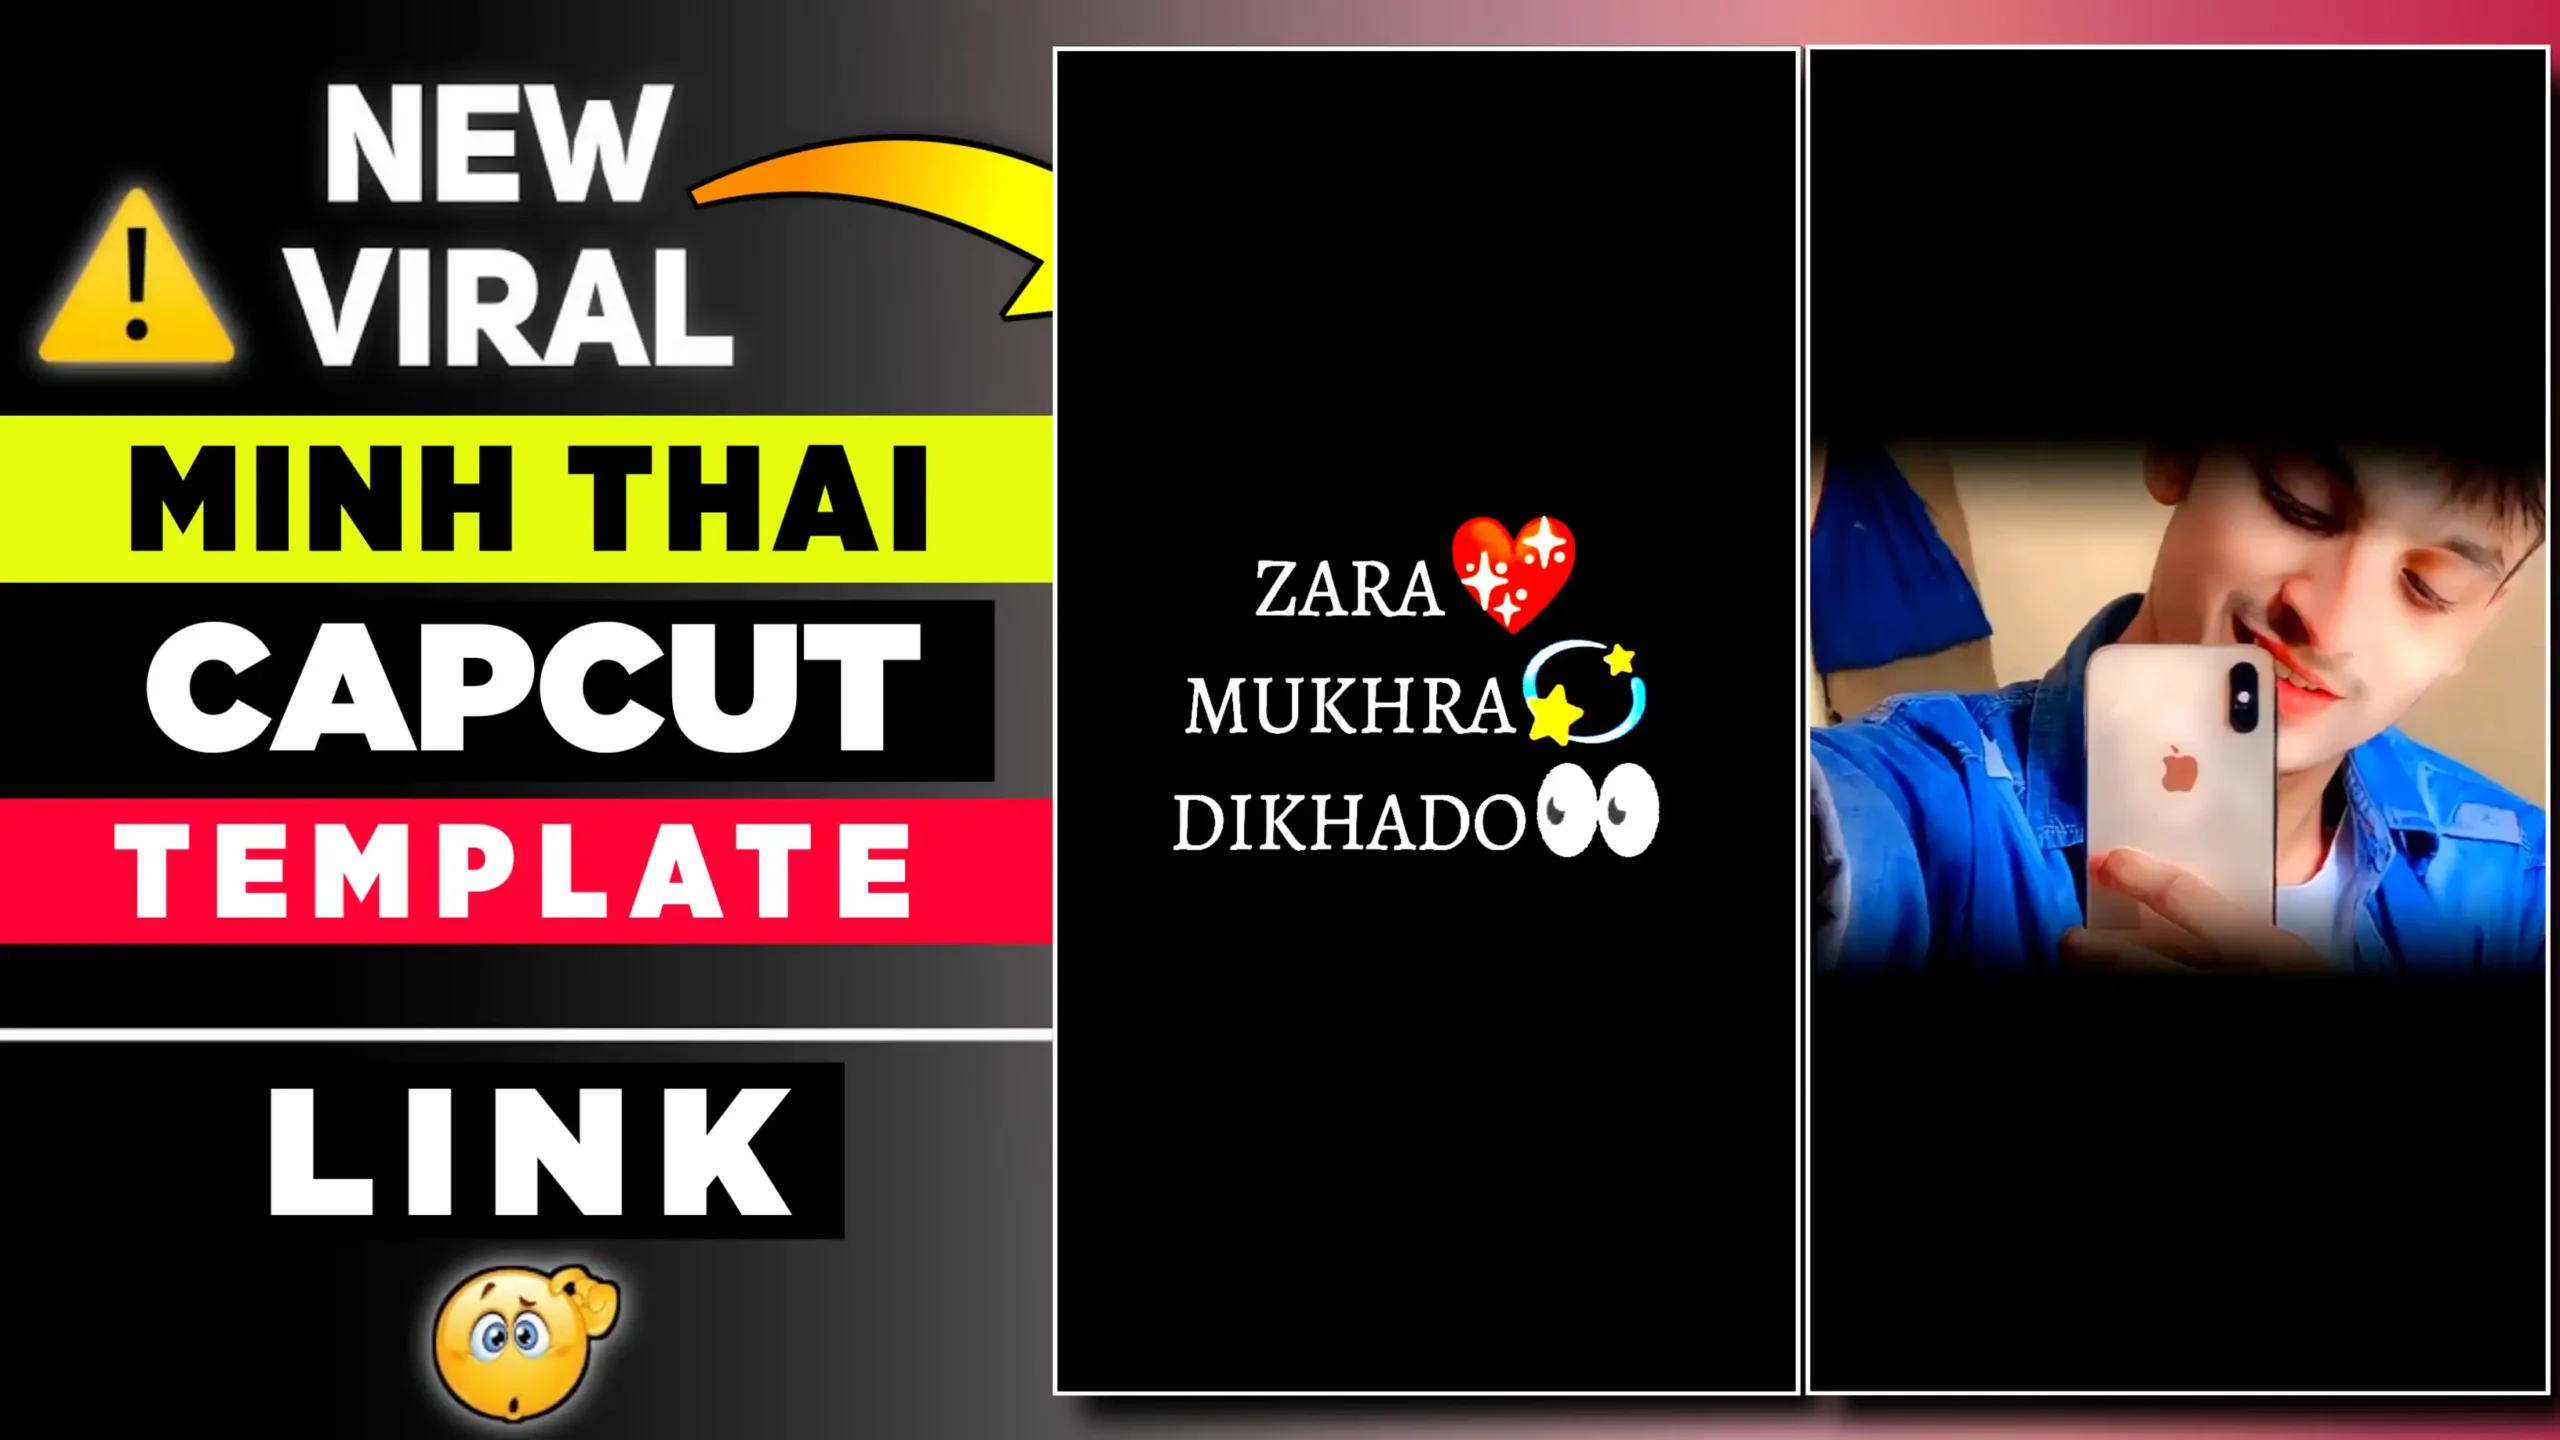 Zara Mukhda Dikha Do Template Capcut